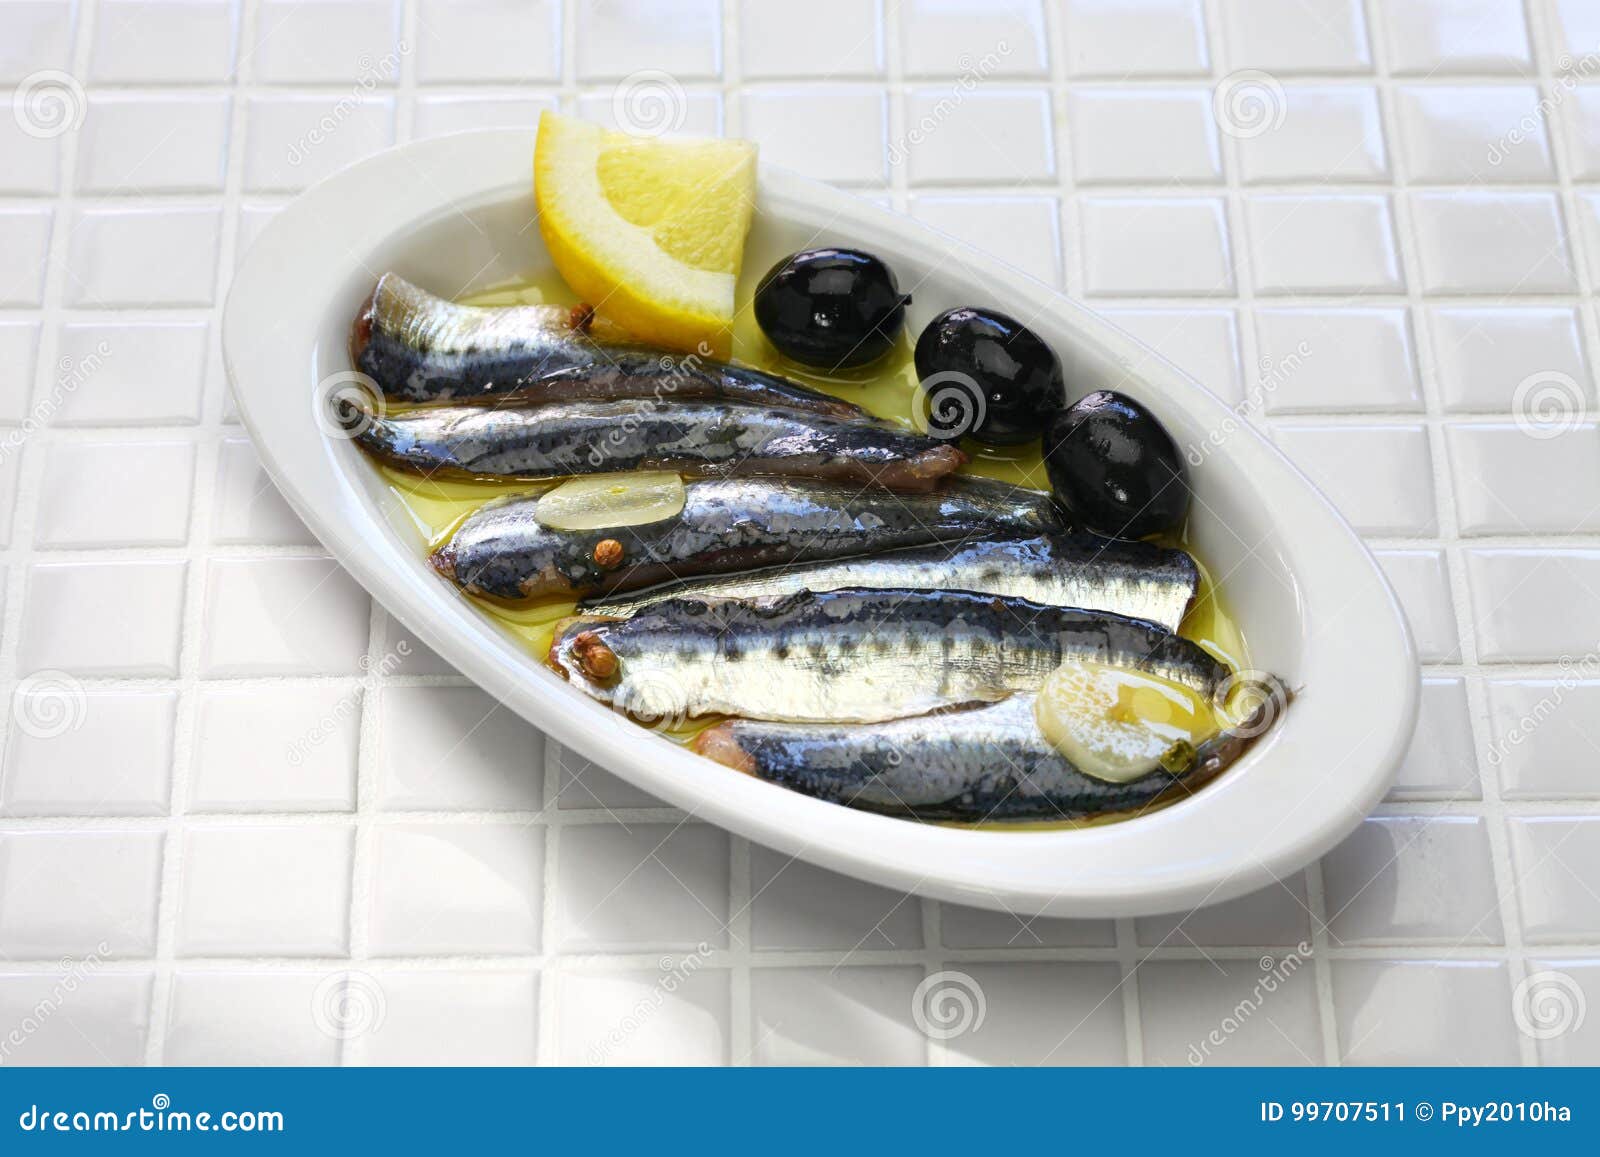 marinated anchovies, spanish tapas food